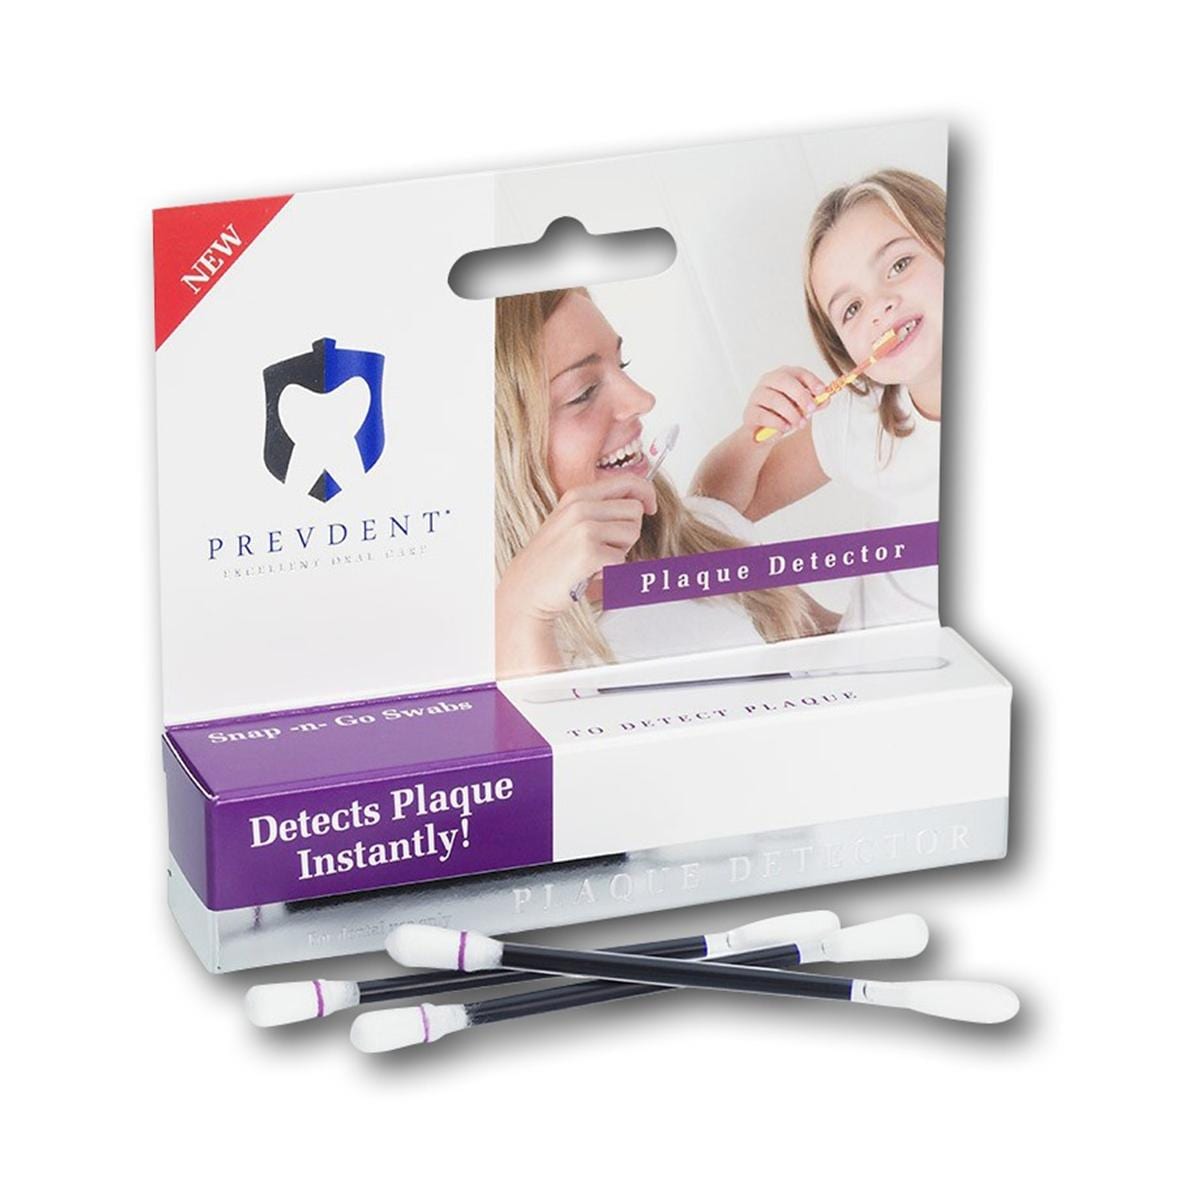 PrevDent Plaque Detection - Complete set